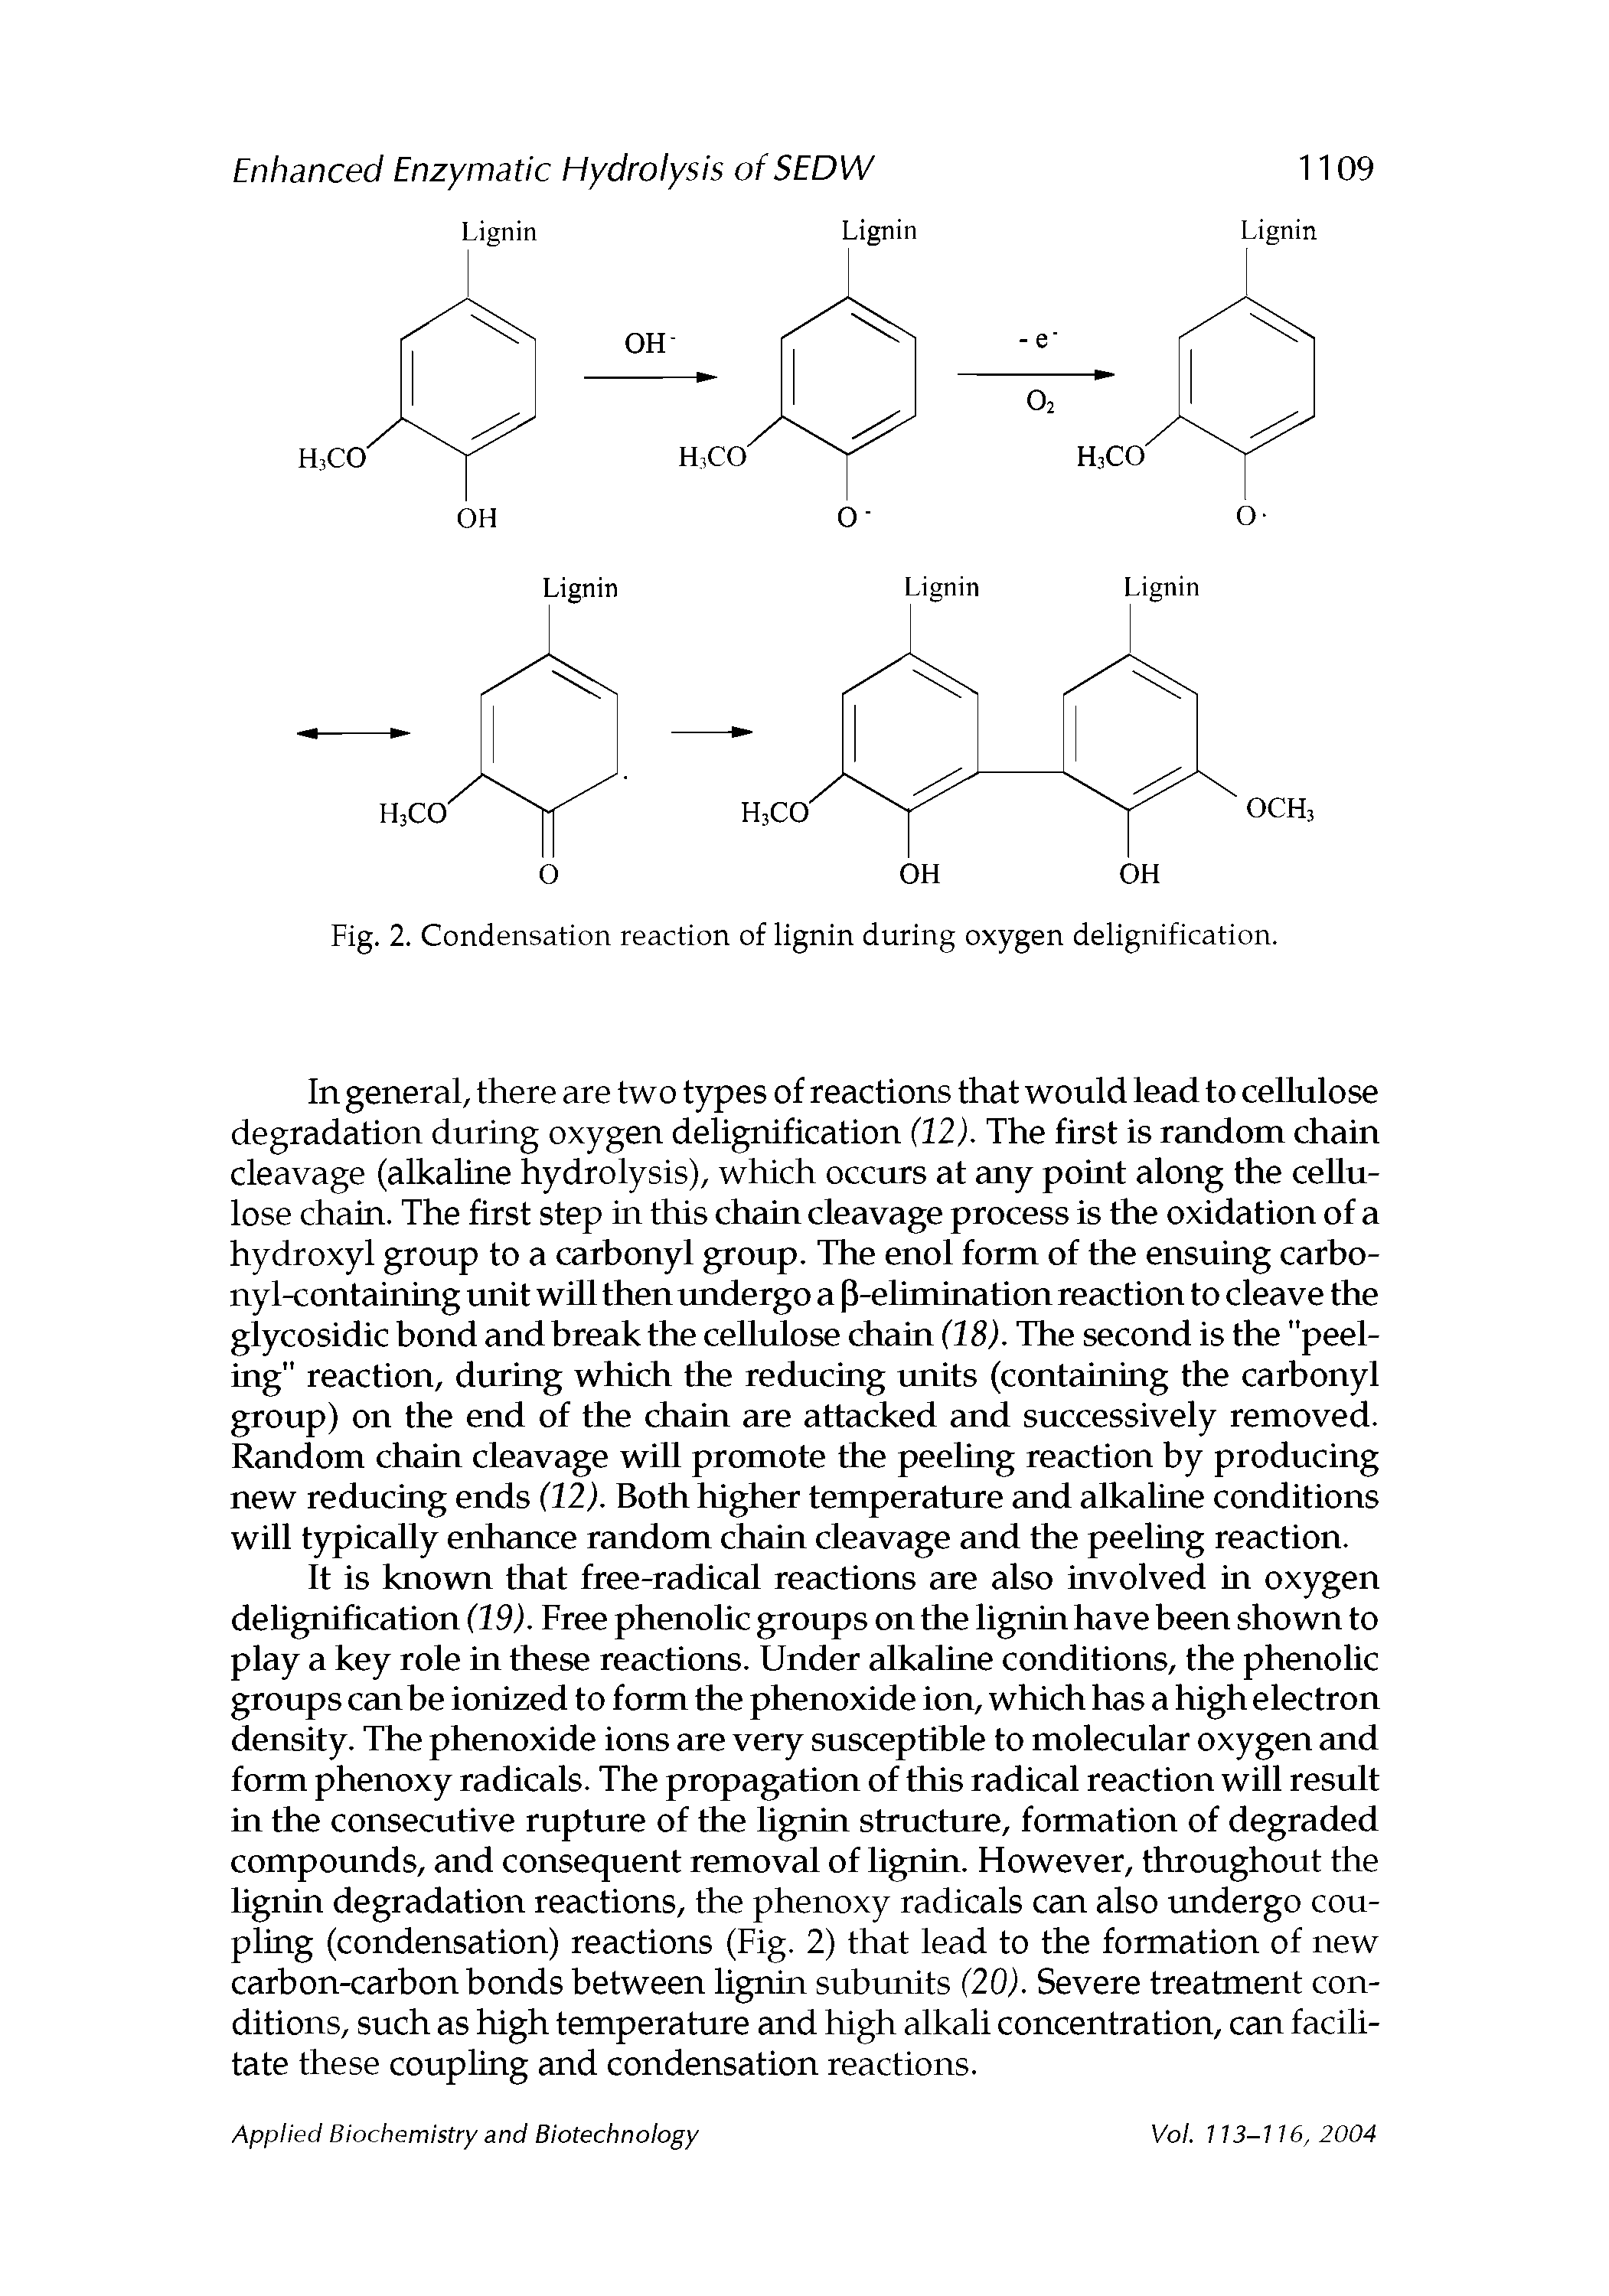 Fig. 2. Condensation reaction of lignin during oxygen delignification.